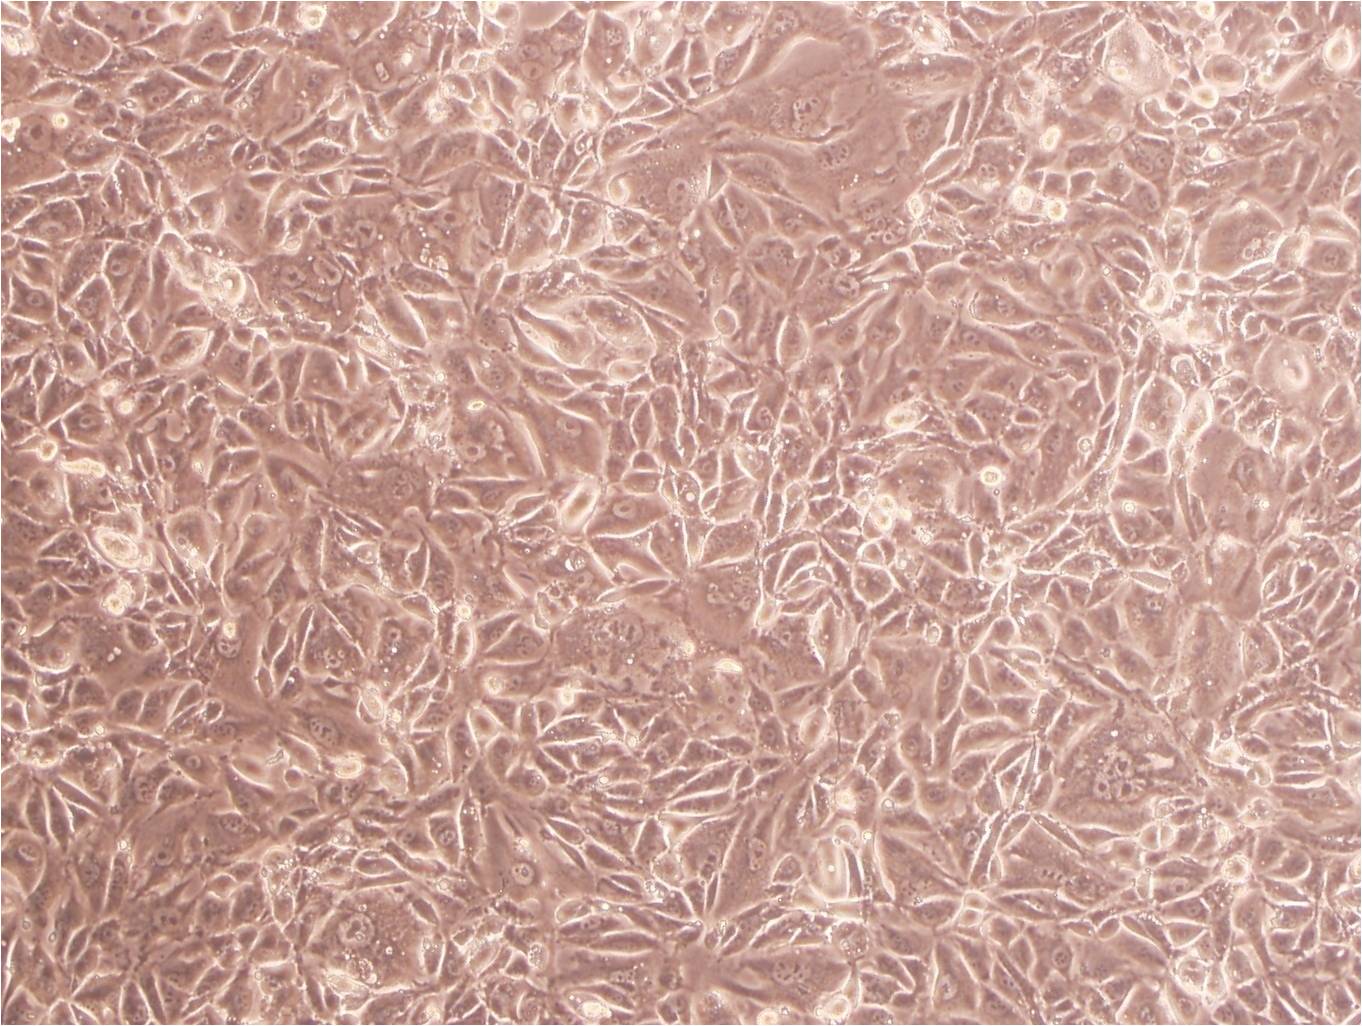 CAL-85-1 Cell|人乳腺癌细胞